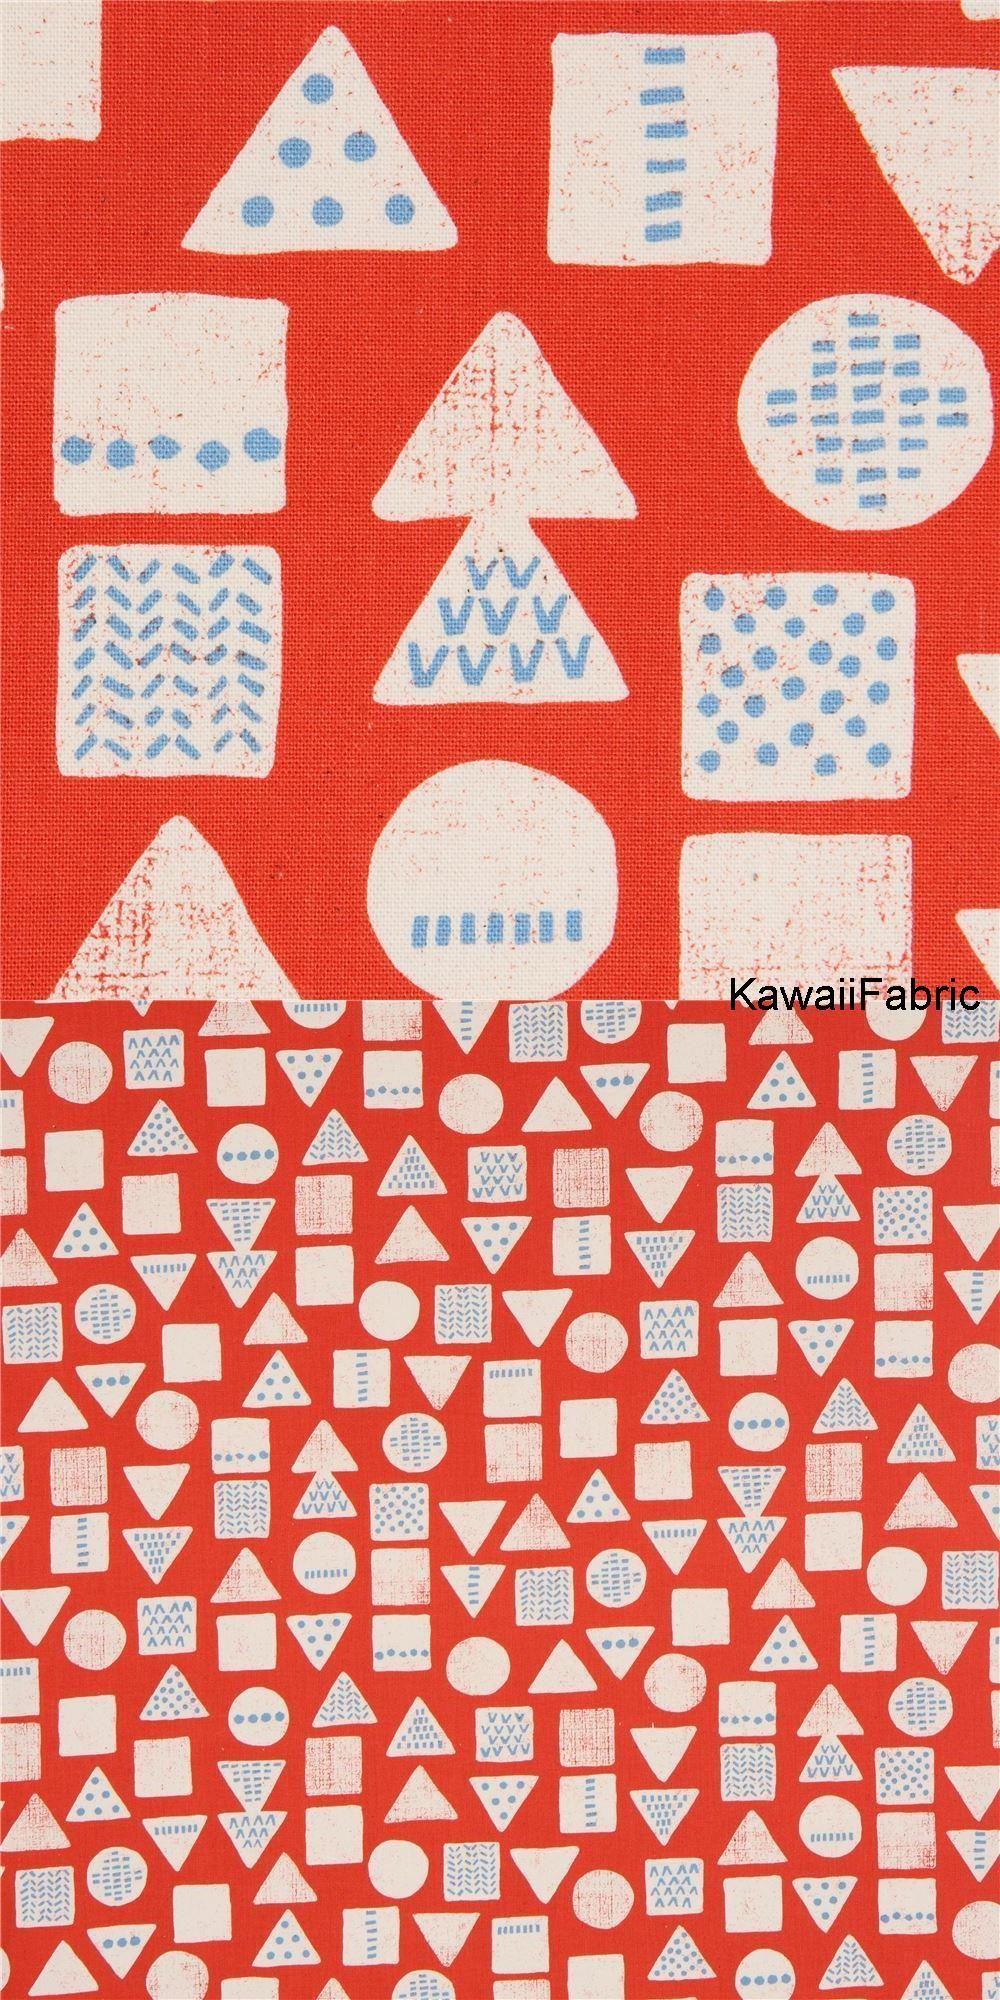 Traingle Square Red Logo - Red Orange Canvas Fabric Triangle Square Circle Shape Kokka Japan